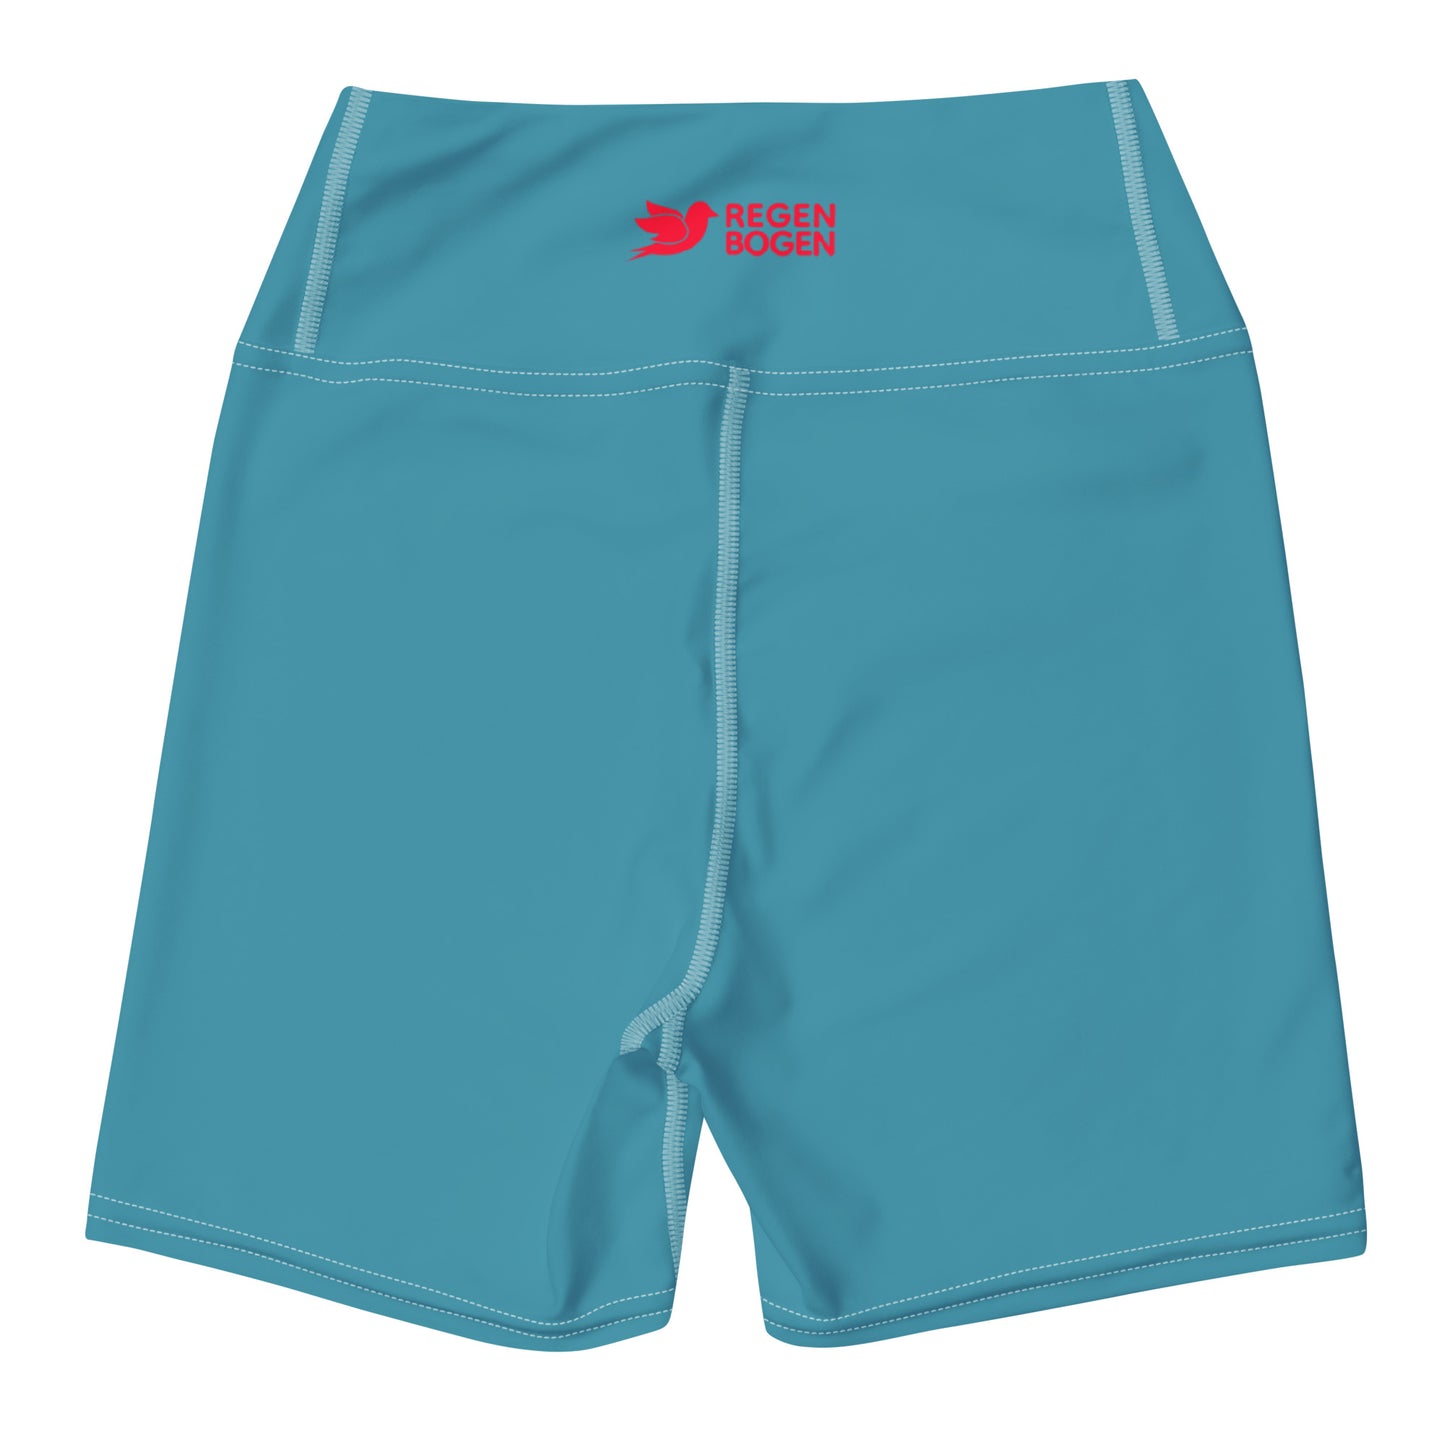 Schnucki Solid Blue High Waist Yoga Shorts / Bike Shorts with Inside Pocket